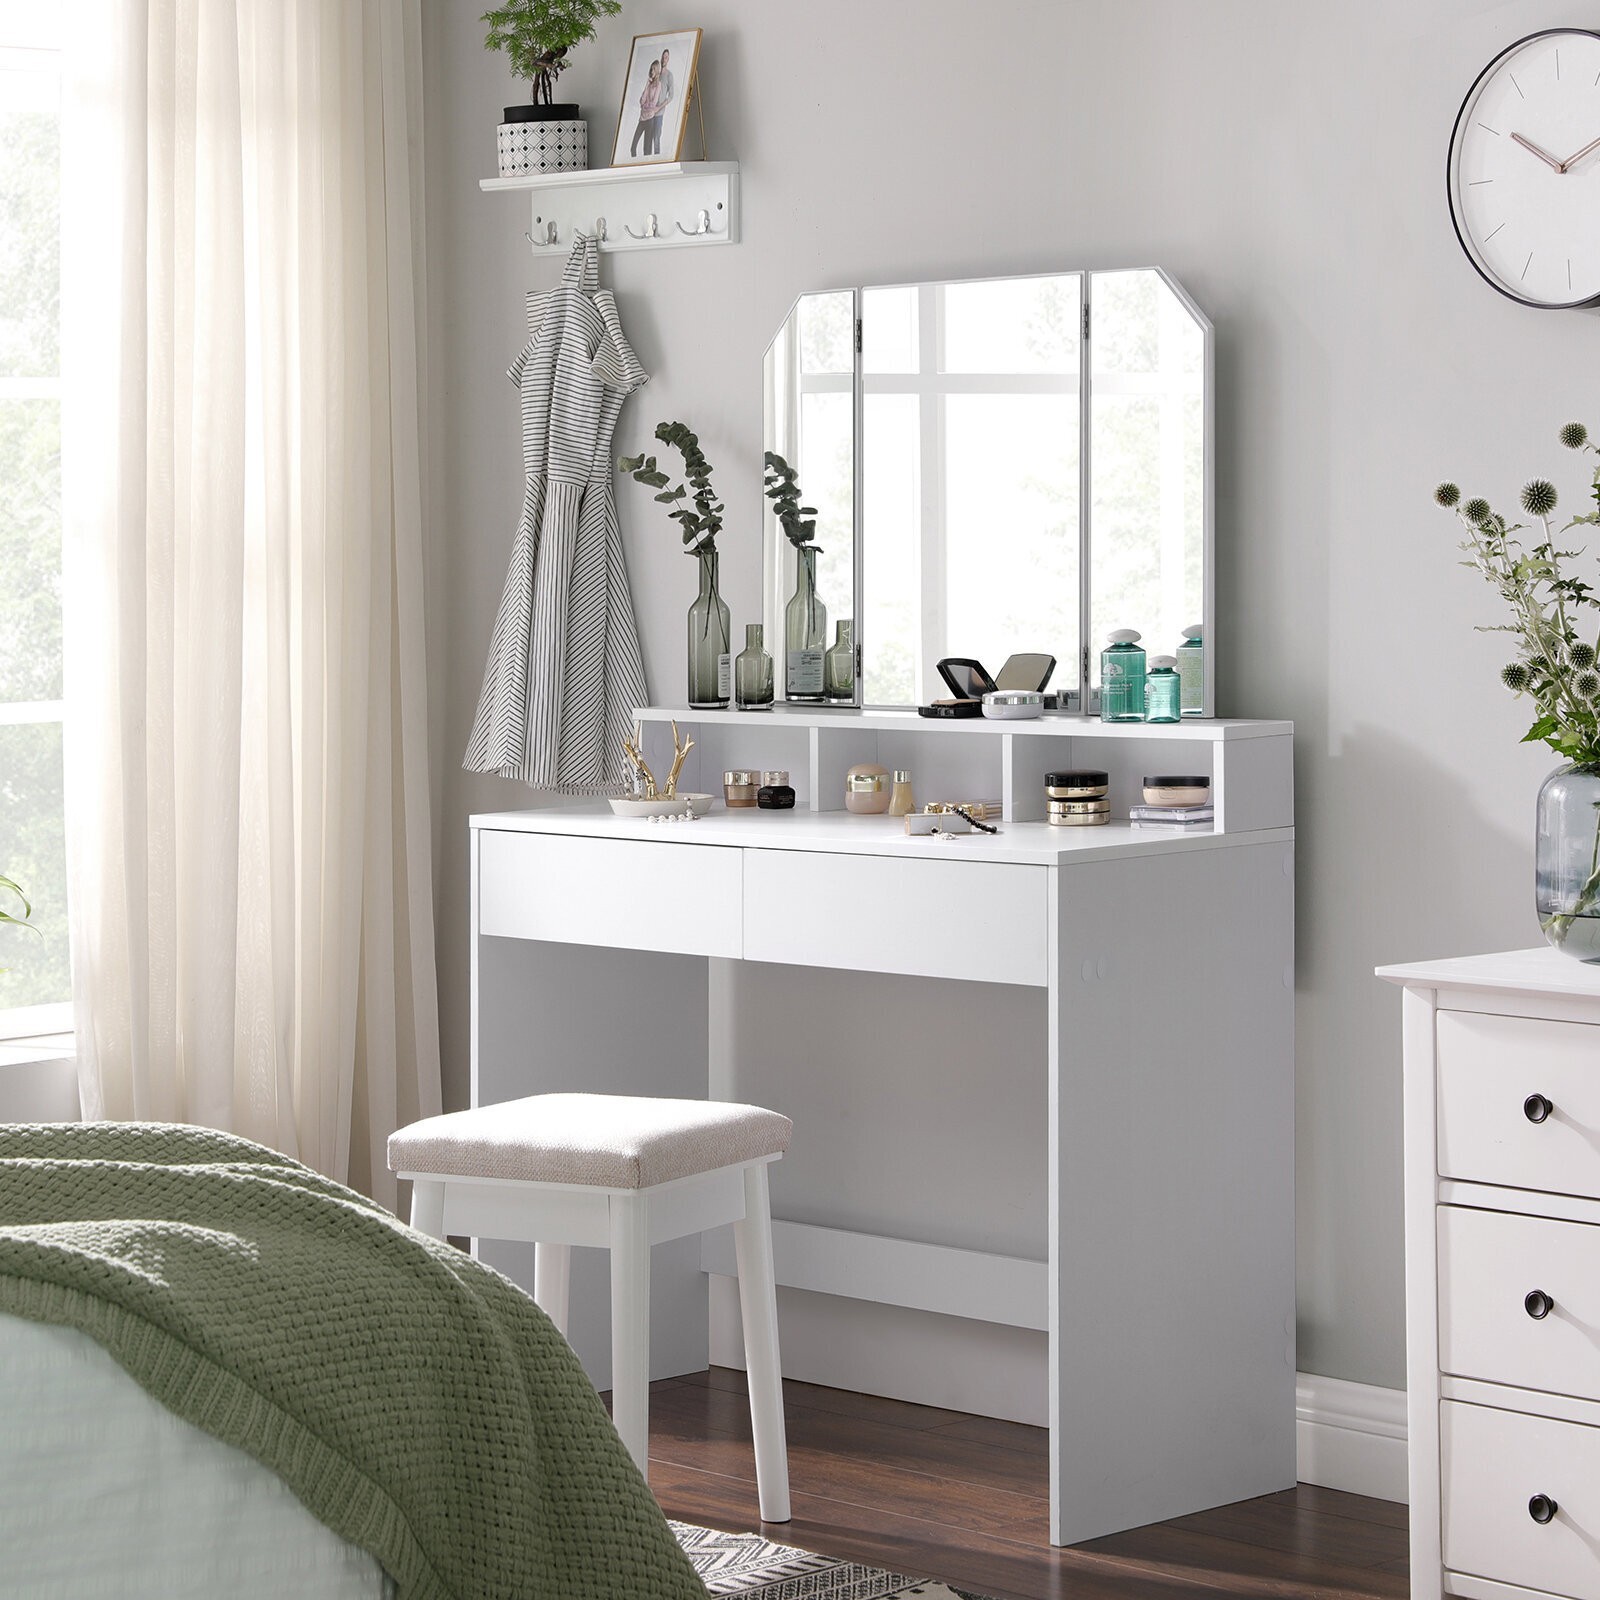 Bedroom Vanity With Storage - Foter